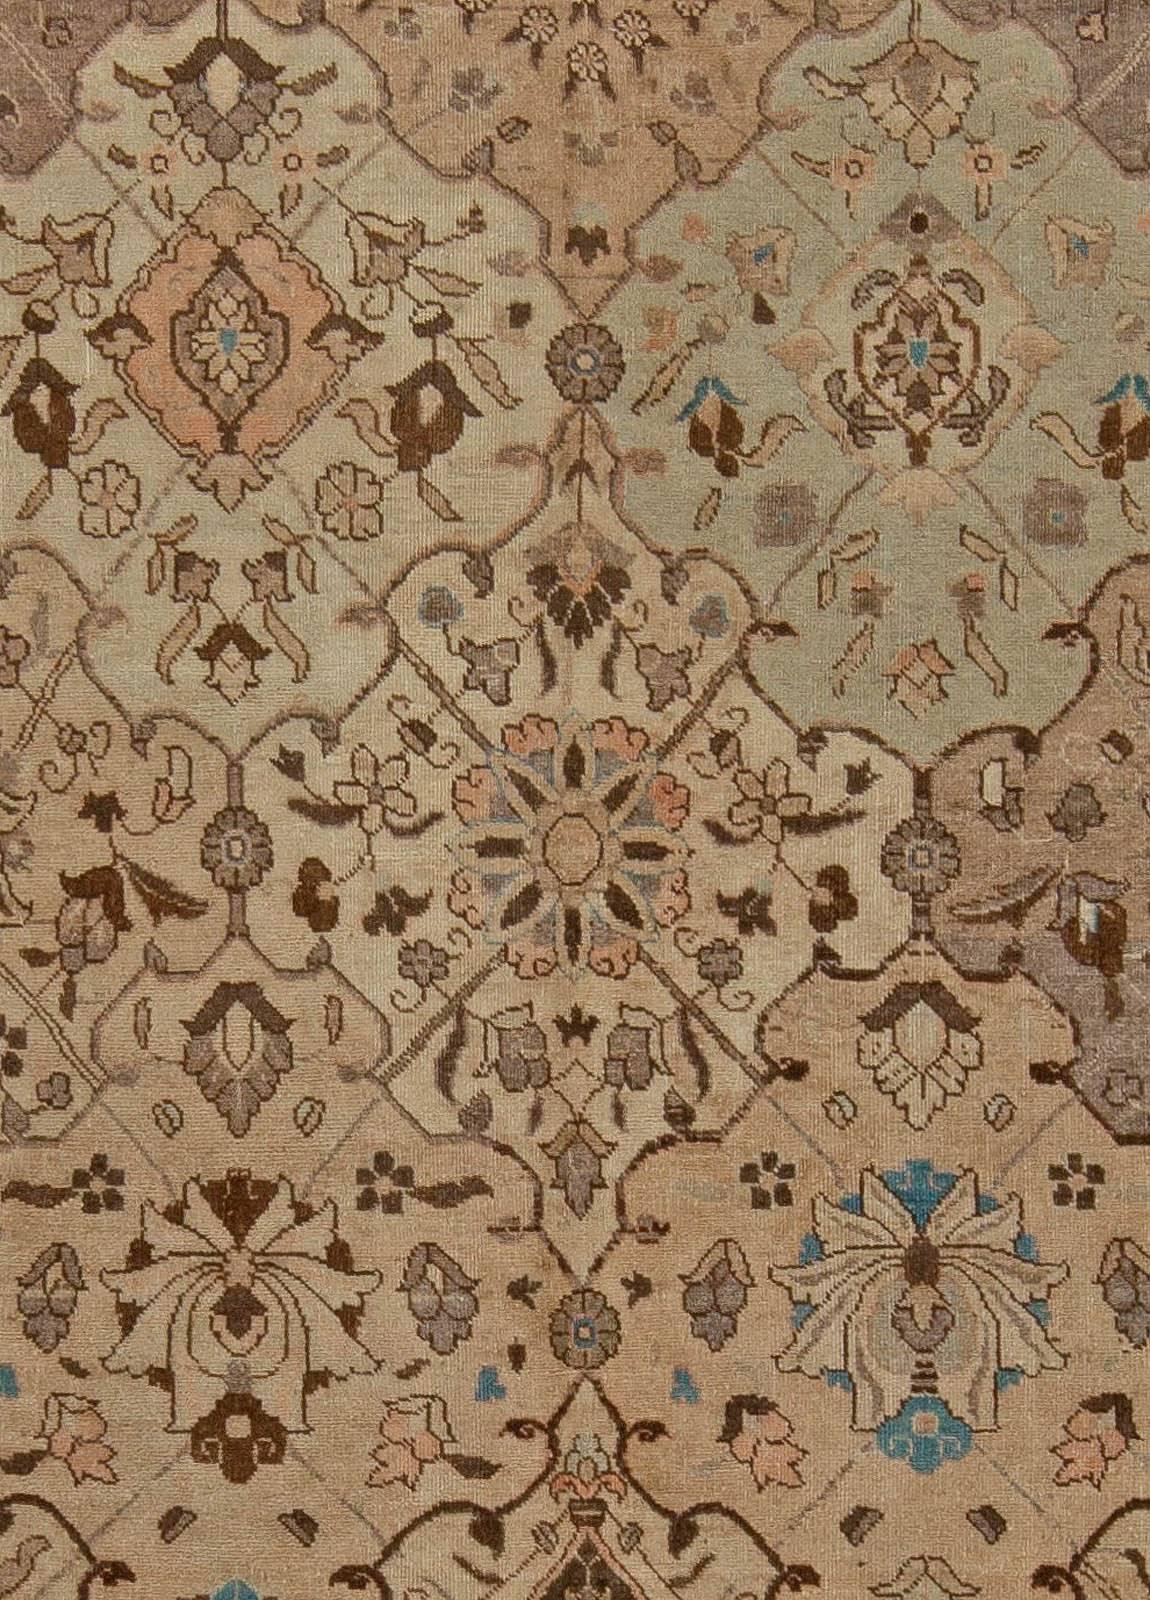 Vintage Persian Tabriz brown handwoven wool carpet
Size: 10'0